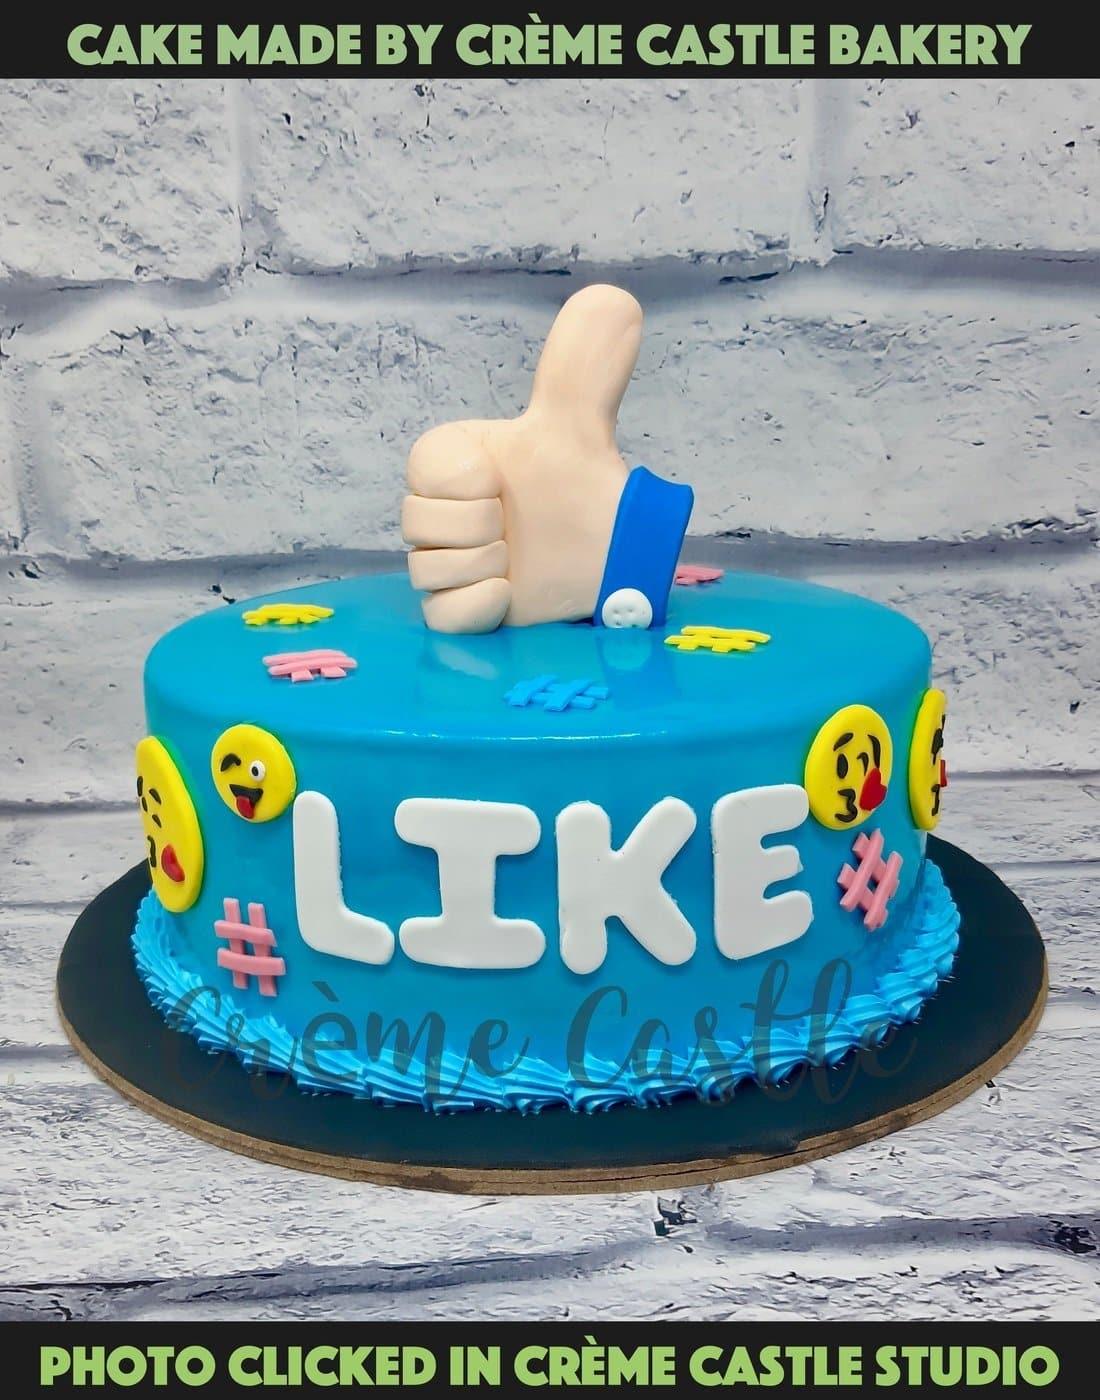 Facebook Theme Cake - Creme Castle